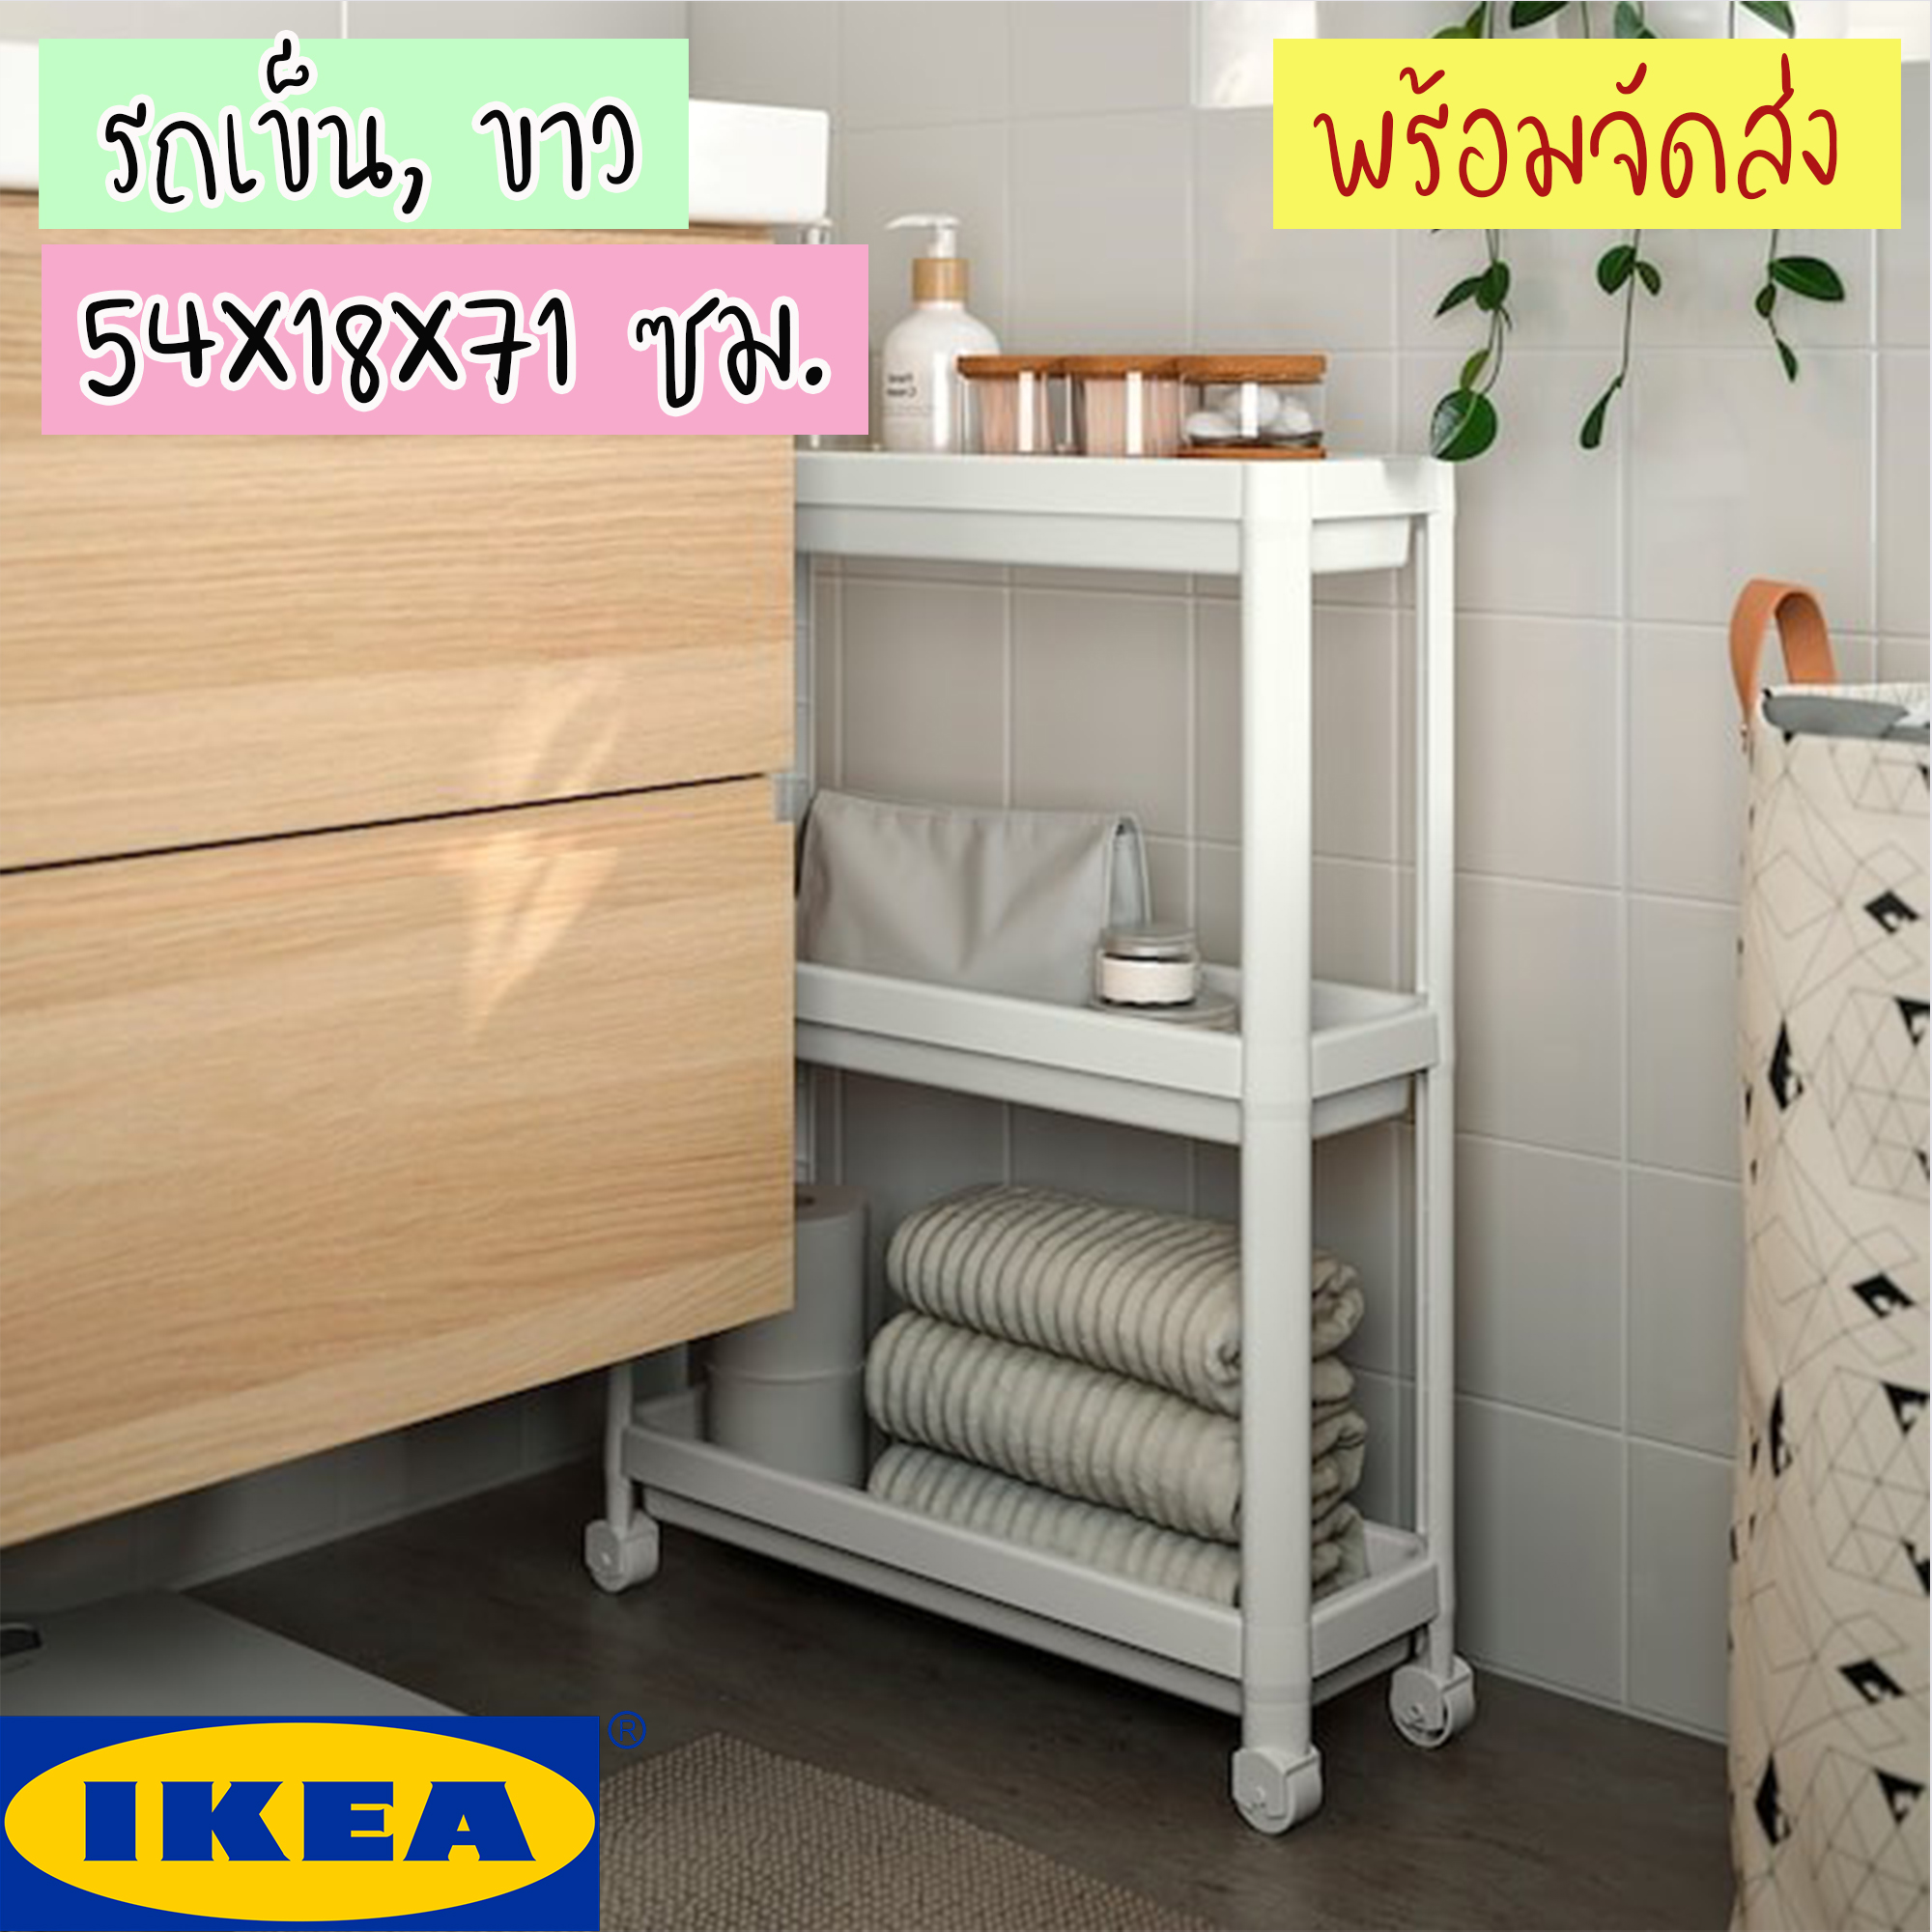 IKEA VESKEN รถเข็น, ขาว 54x18x71 ซม.